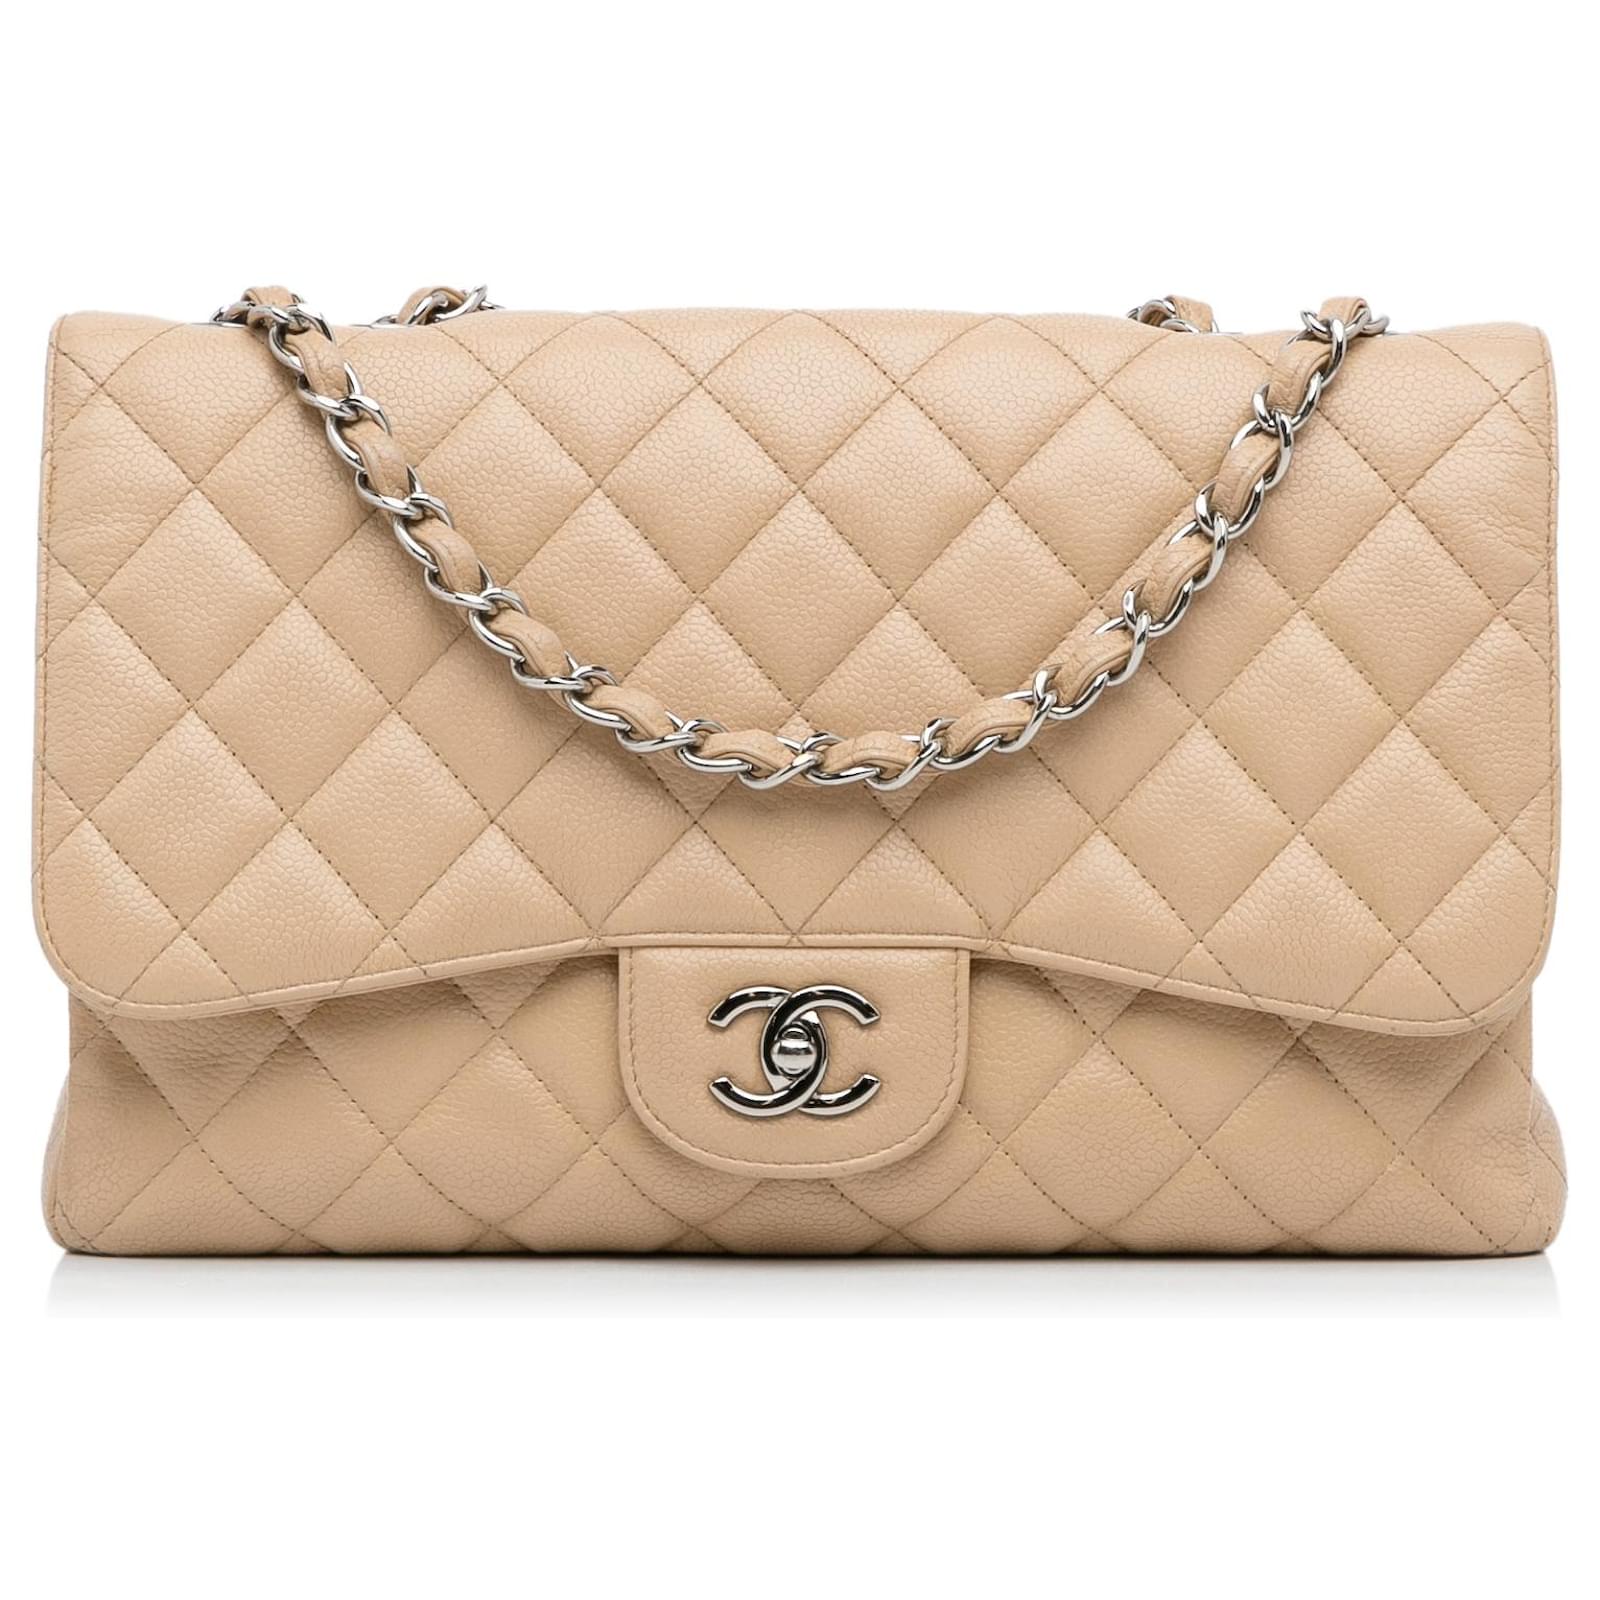 Chanel Brown Jumbo Classic Caviar Single Flap Bag Beige Leather